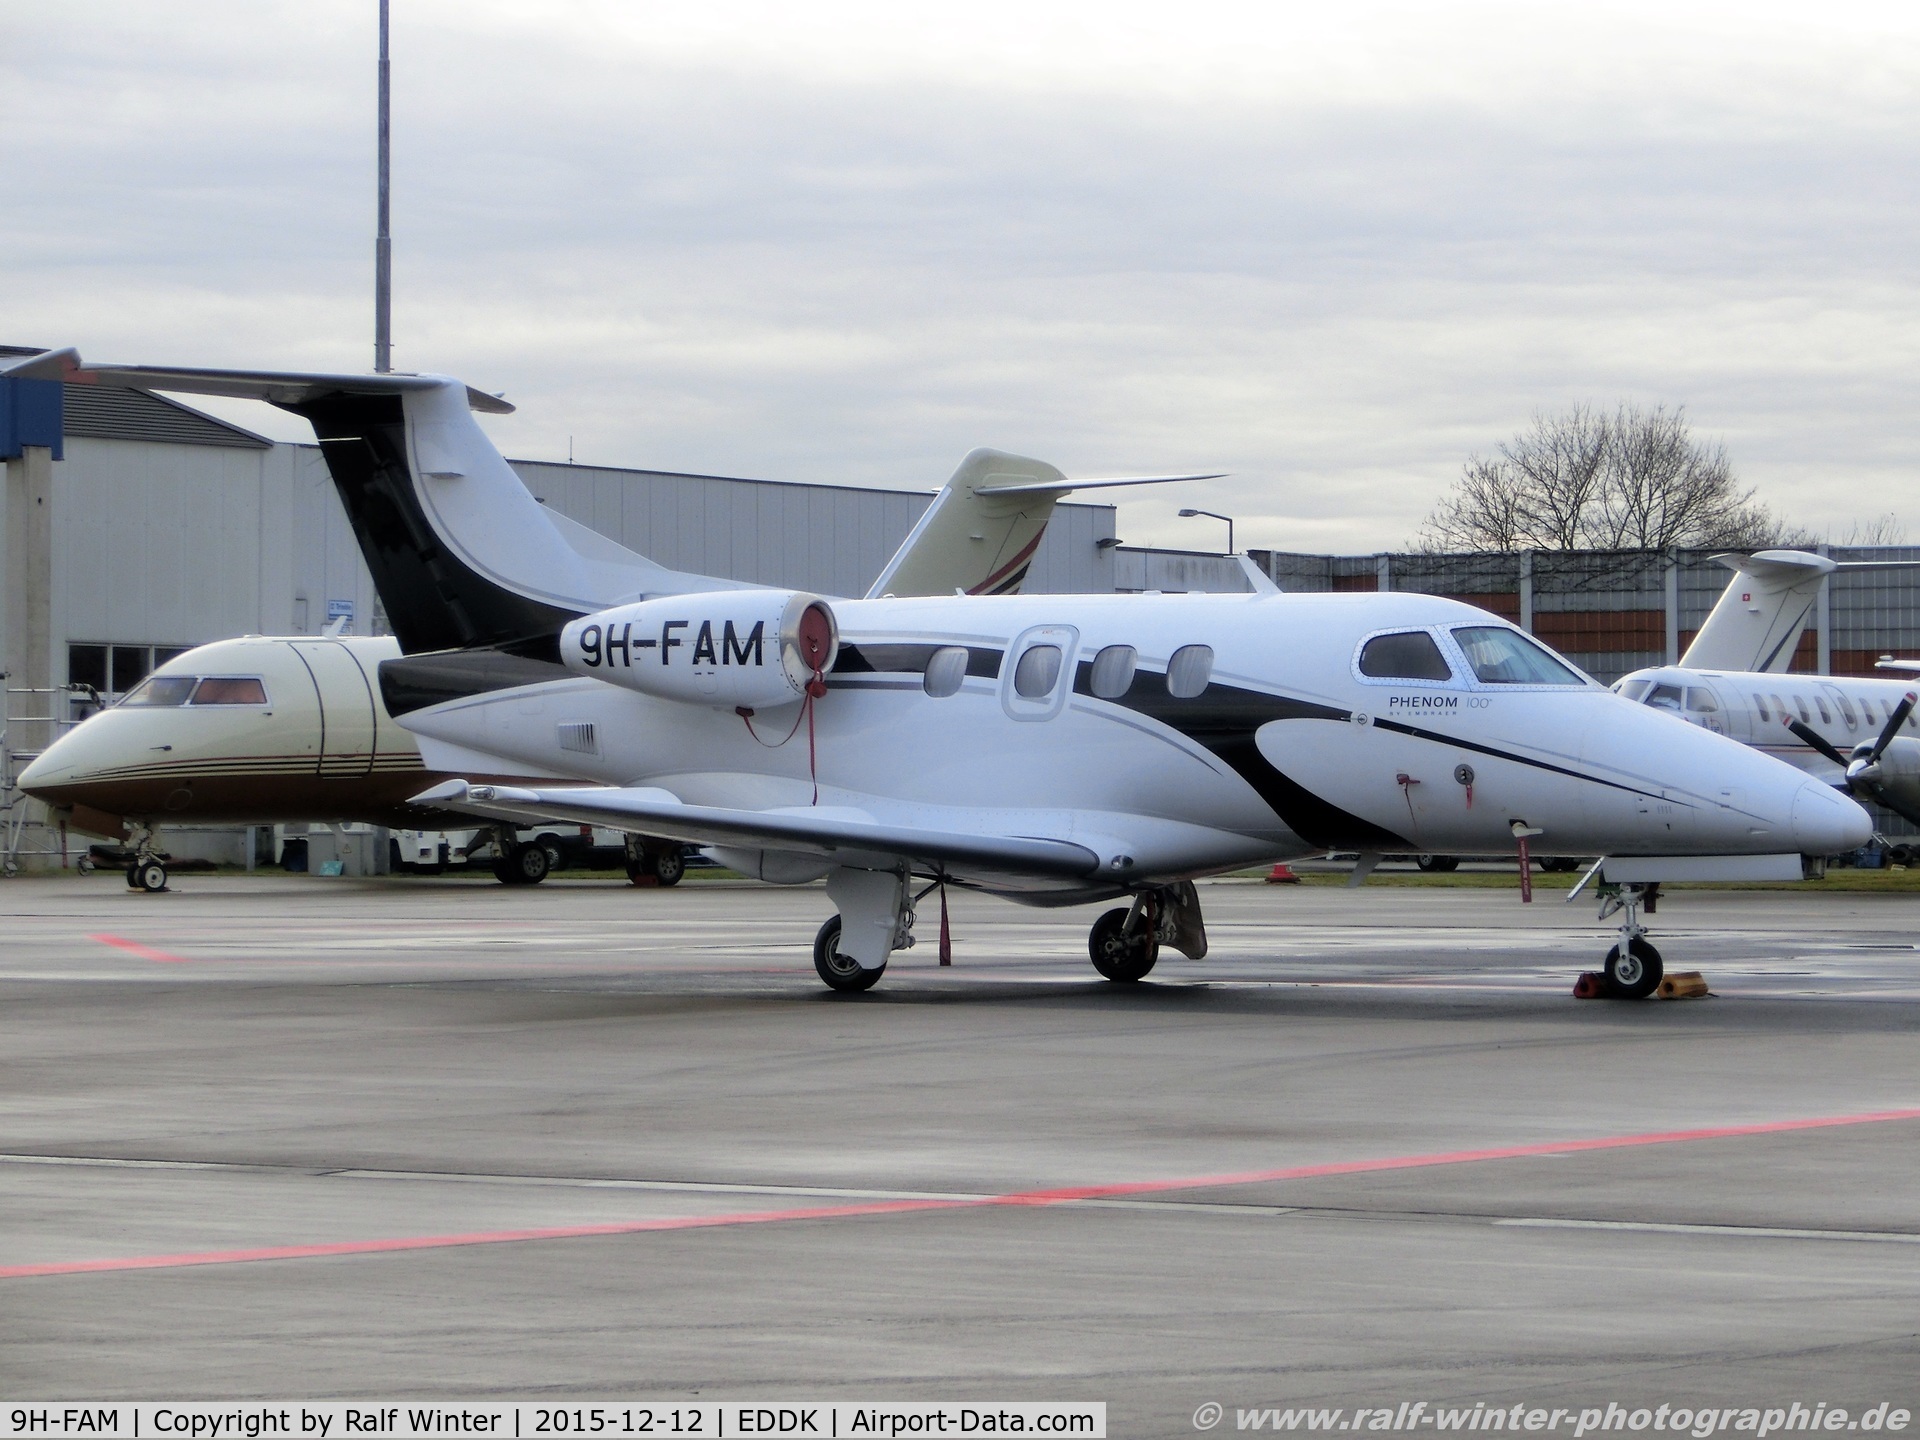 9H-FAM, 2009 Embraer EMB-500 Phenom 100 C/N 50000100, Embraer Phenom 100 EMB-500 - LWG Luxwing Ltd - 50000100 - 9H-FAM - 12.12.2015 - CGN